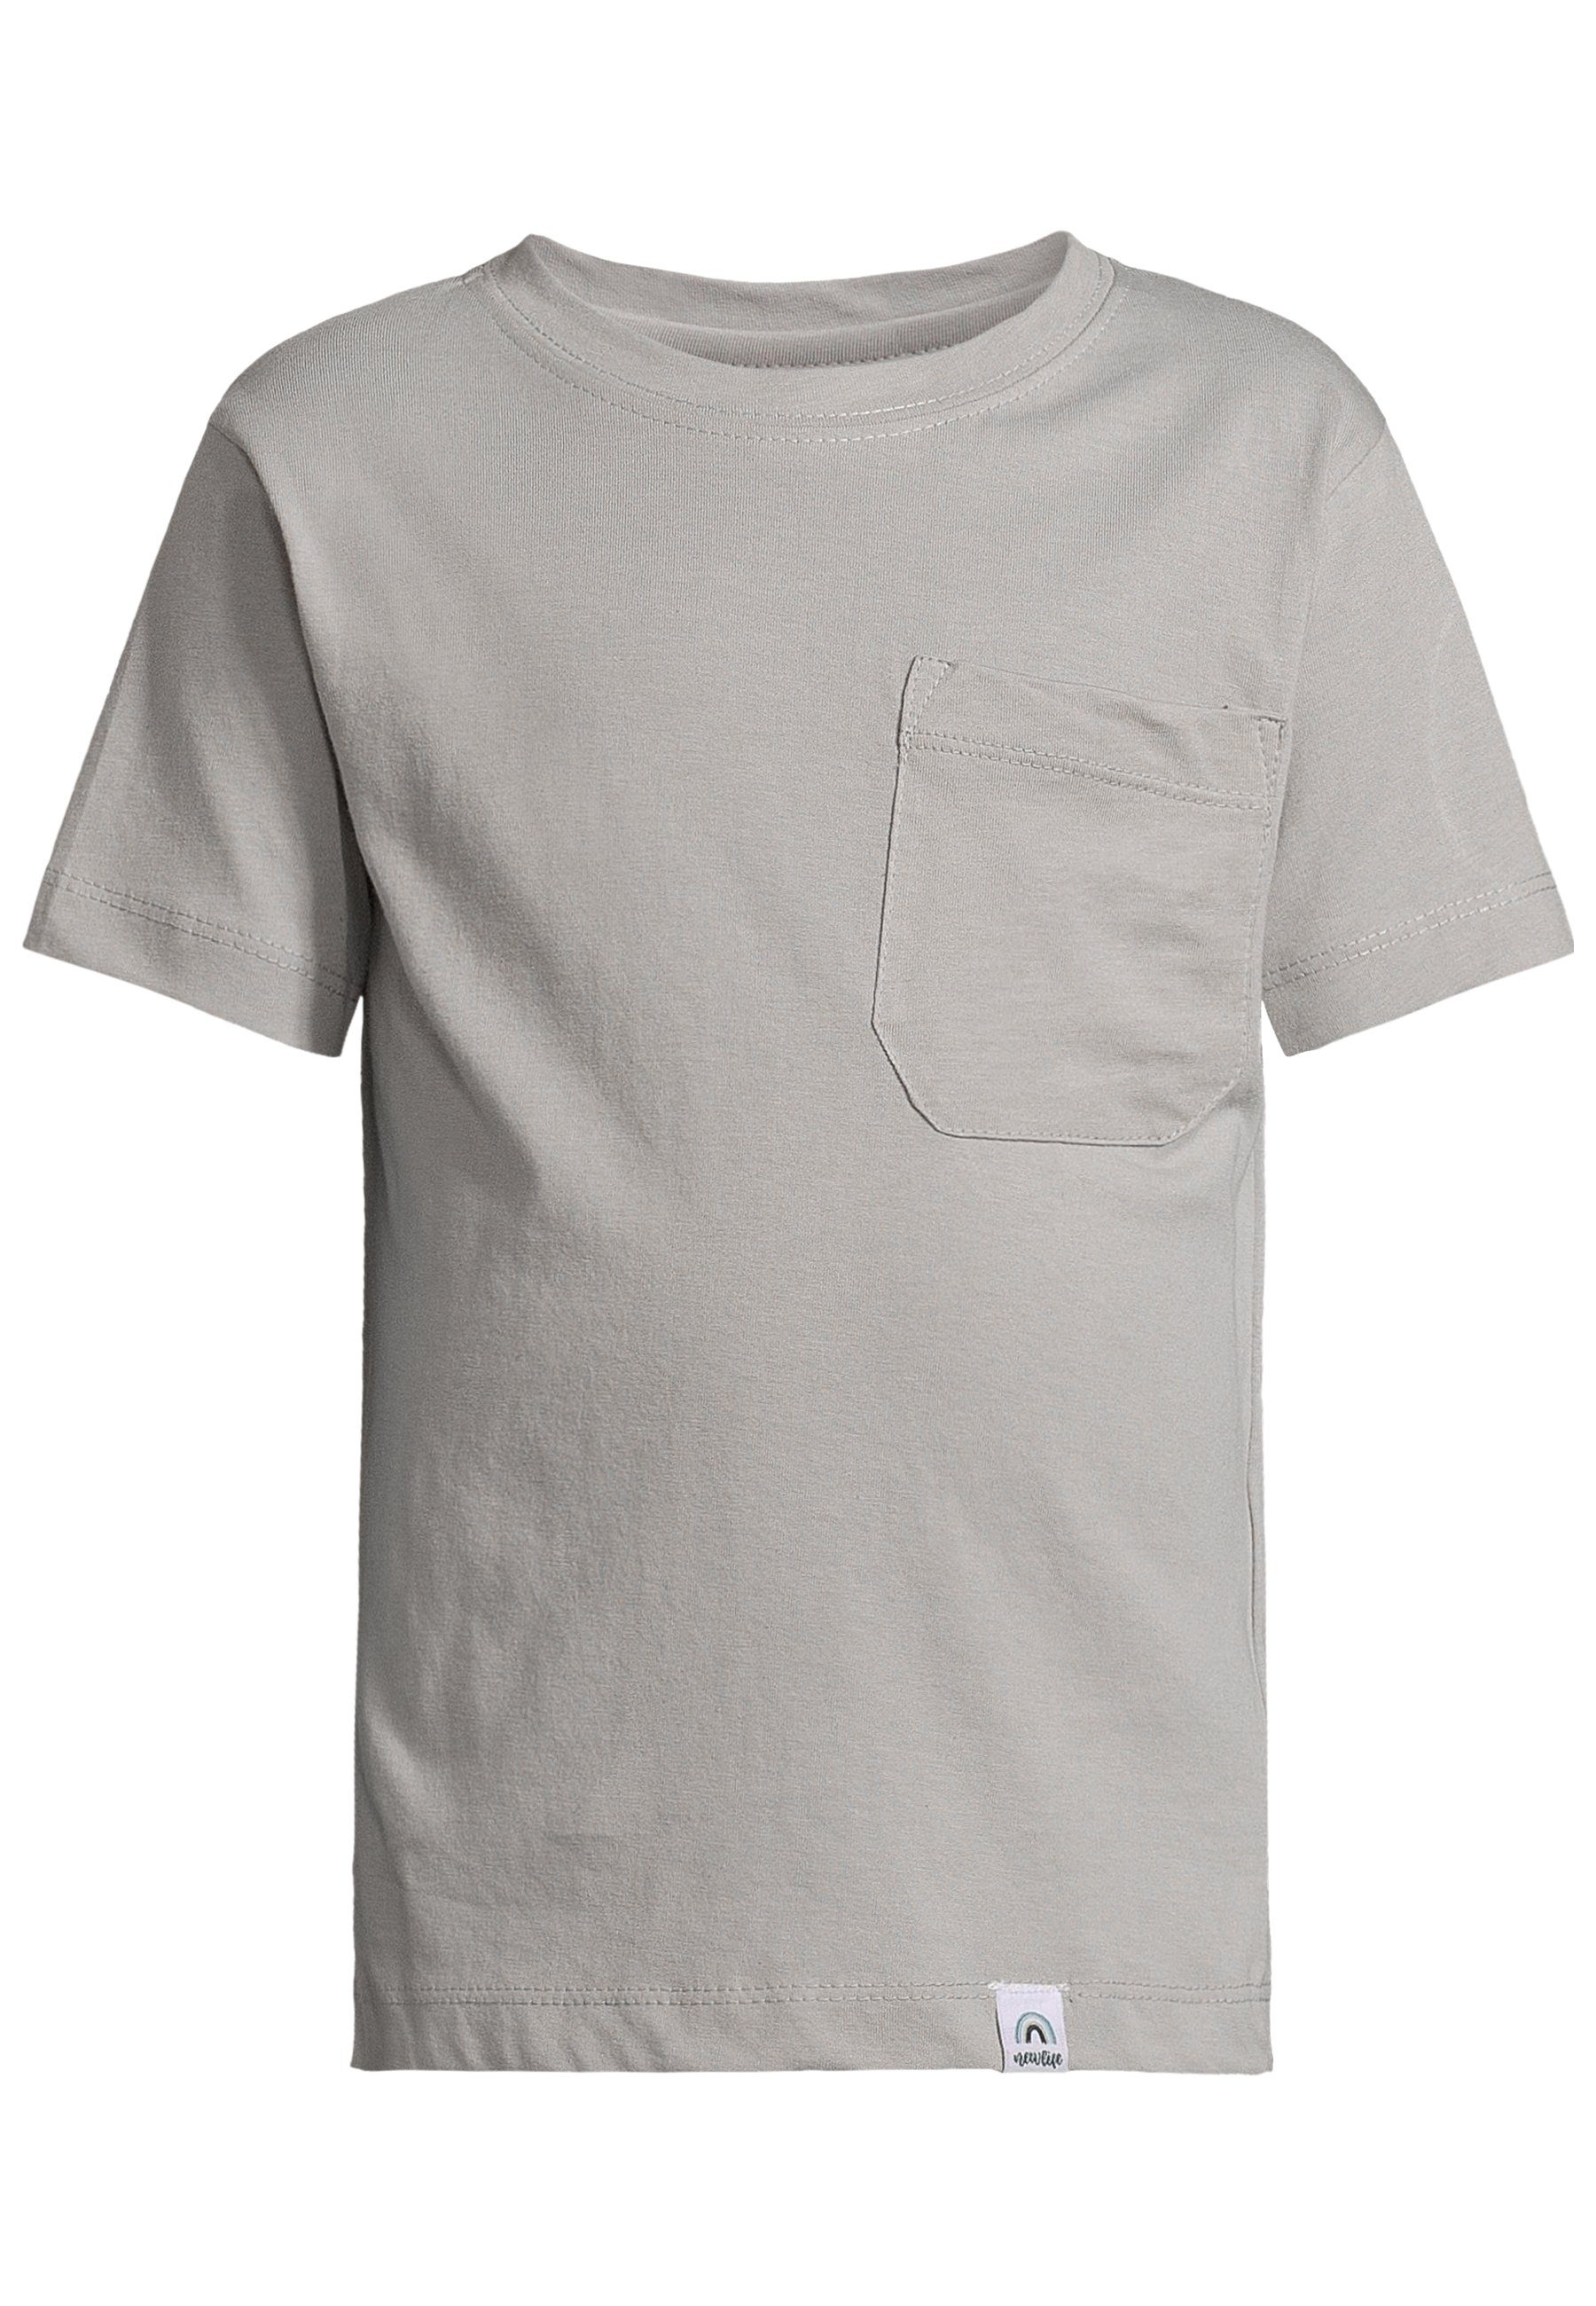 GOTS - zertifizierte New T-Shirt grau POCKET CREW PATCH TEE Life NECK Bio-Baumwolle